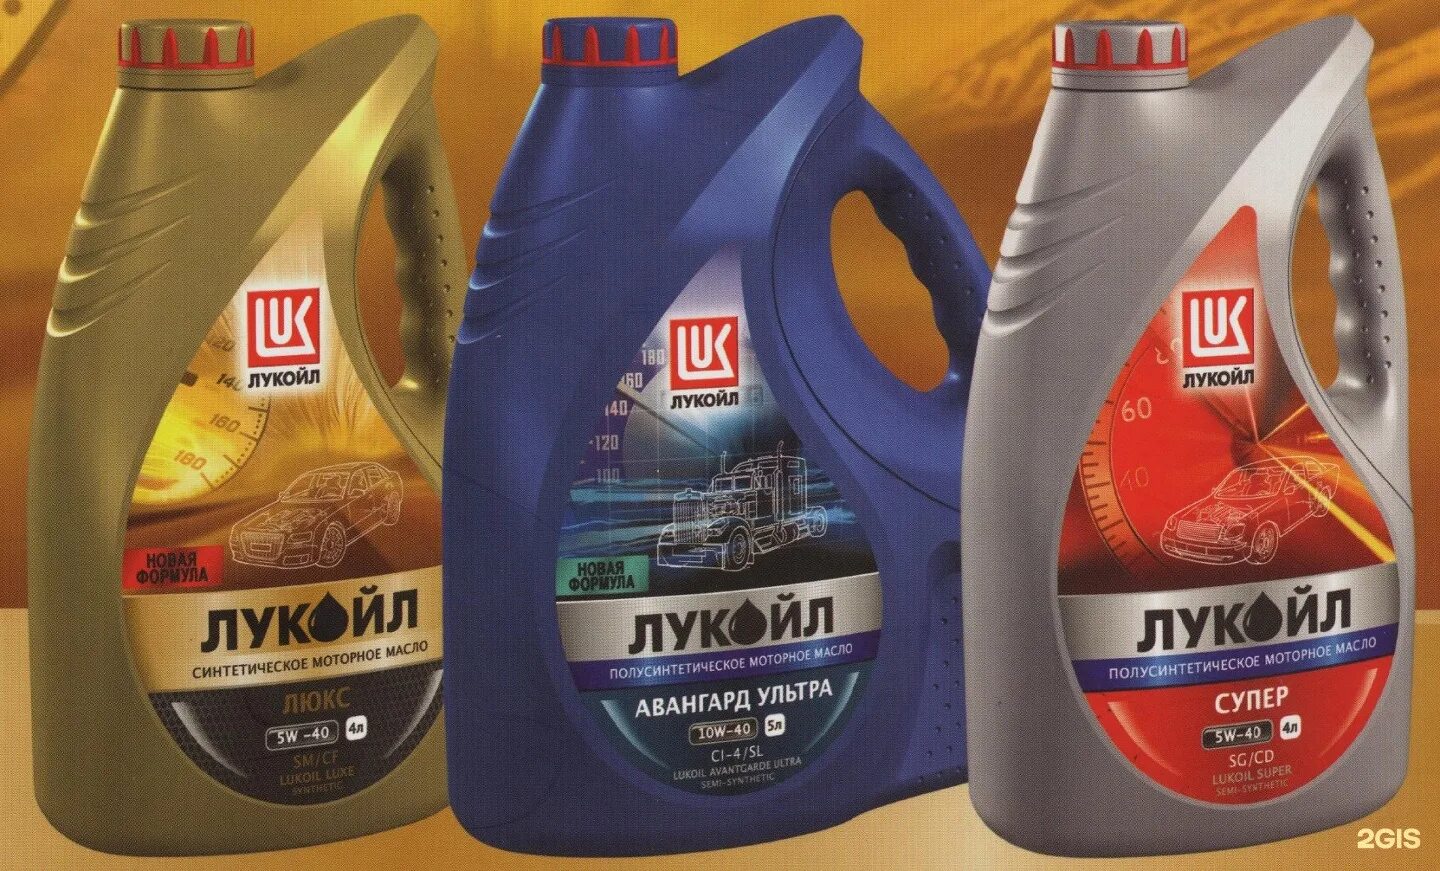 Продажи масла лукойл. Lukoil масло. Лукойл продукция. Моторное масло Лукойл реклама. Лукойл масла баннер.